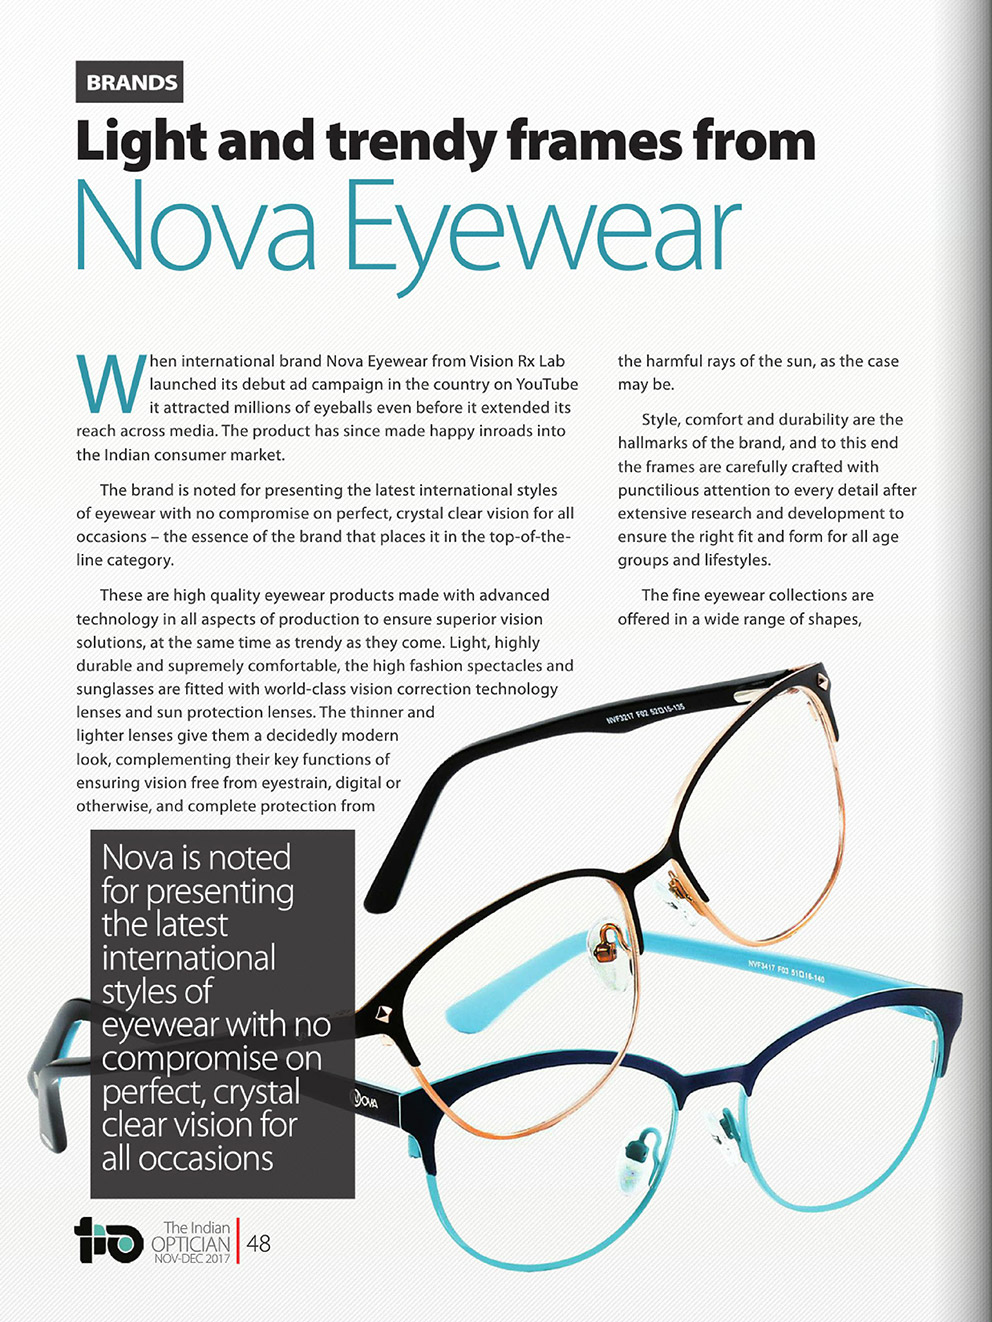 Light and trendy frames from Nova Eyewear